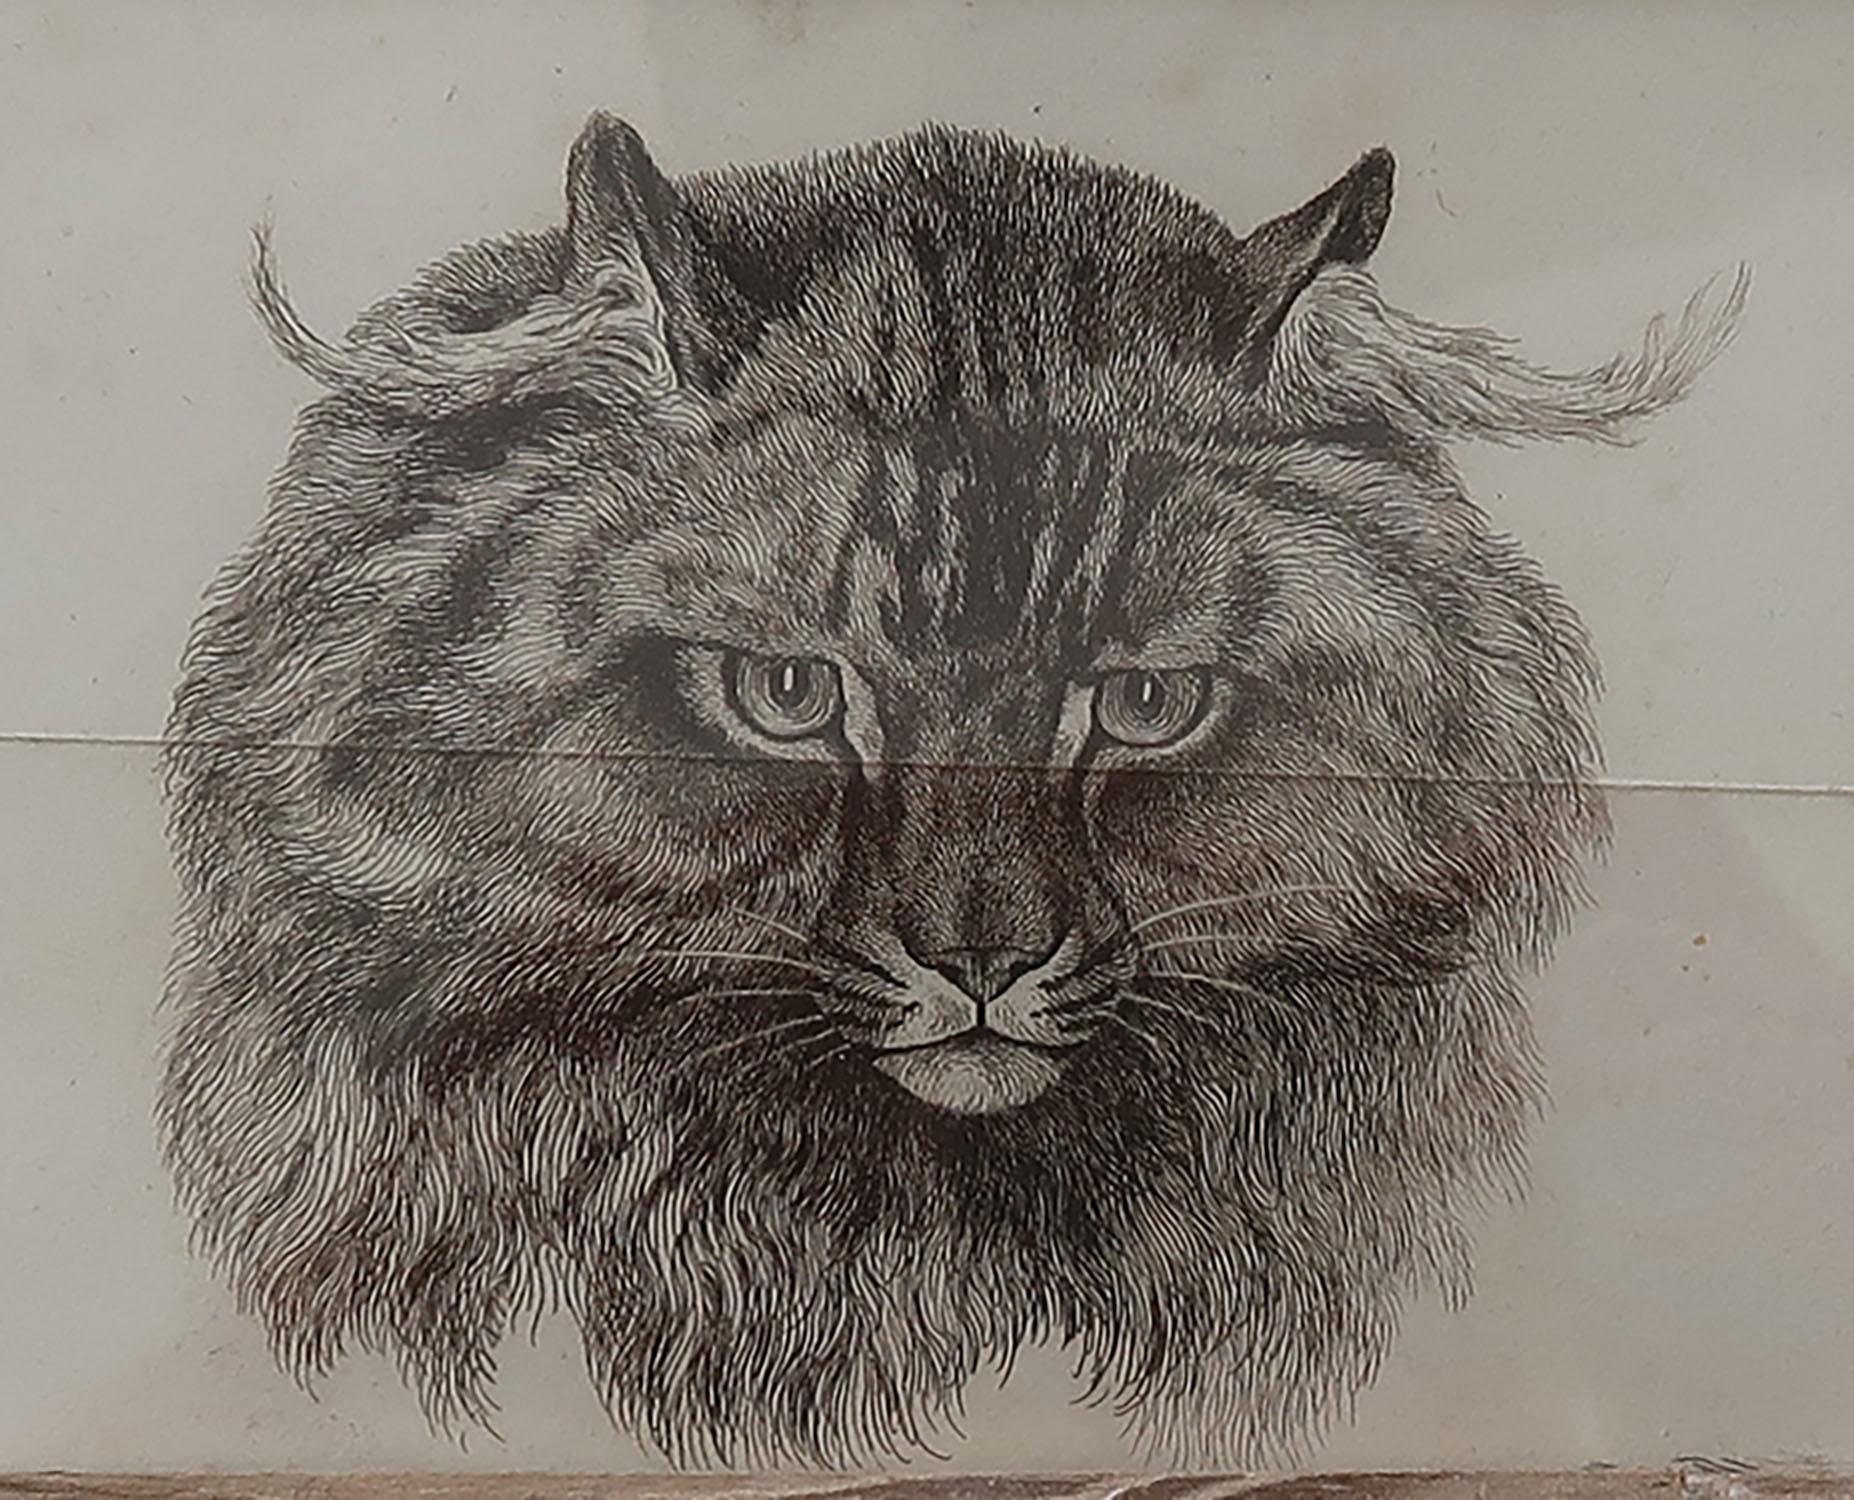 Folk Art Original Antique Print of a Cat After Landseer, Early 19th Century For Sale